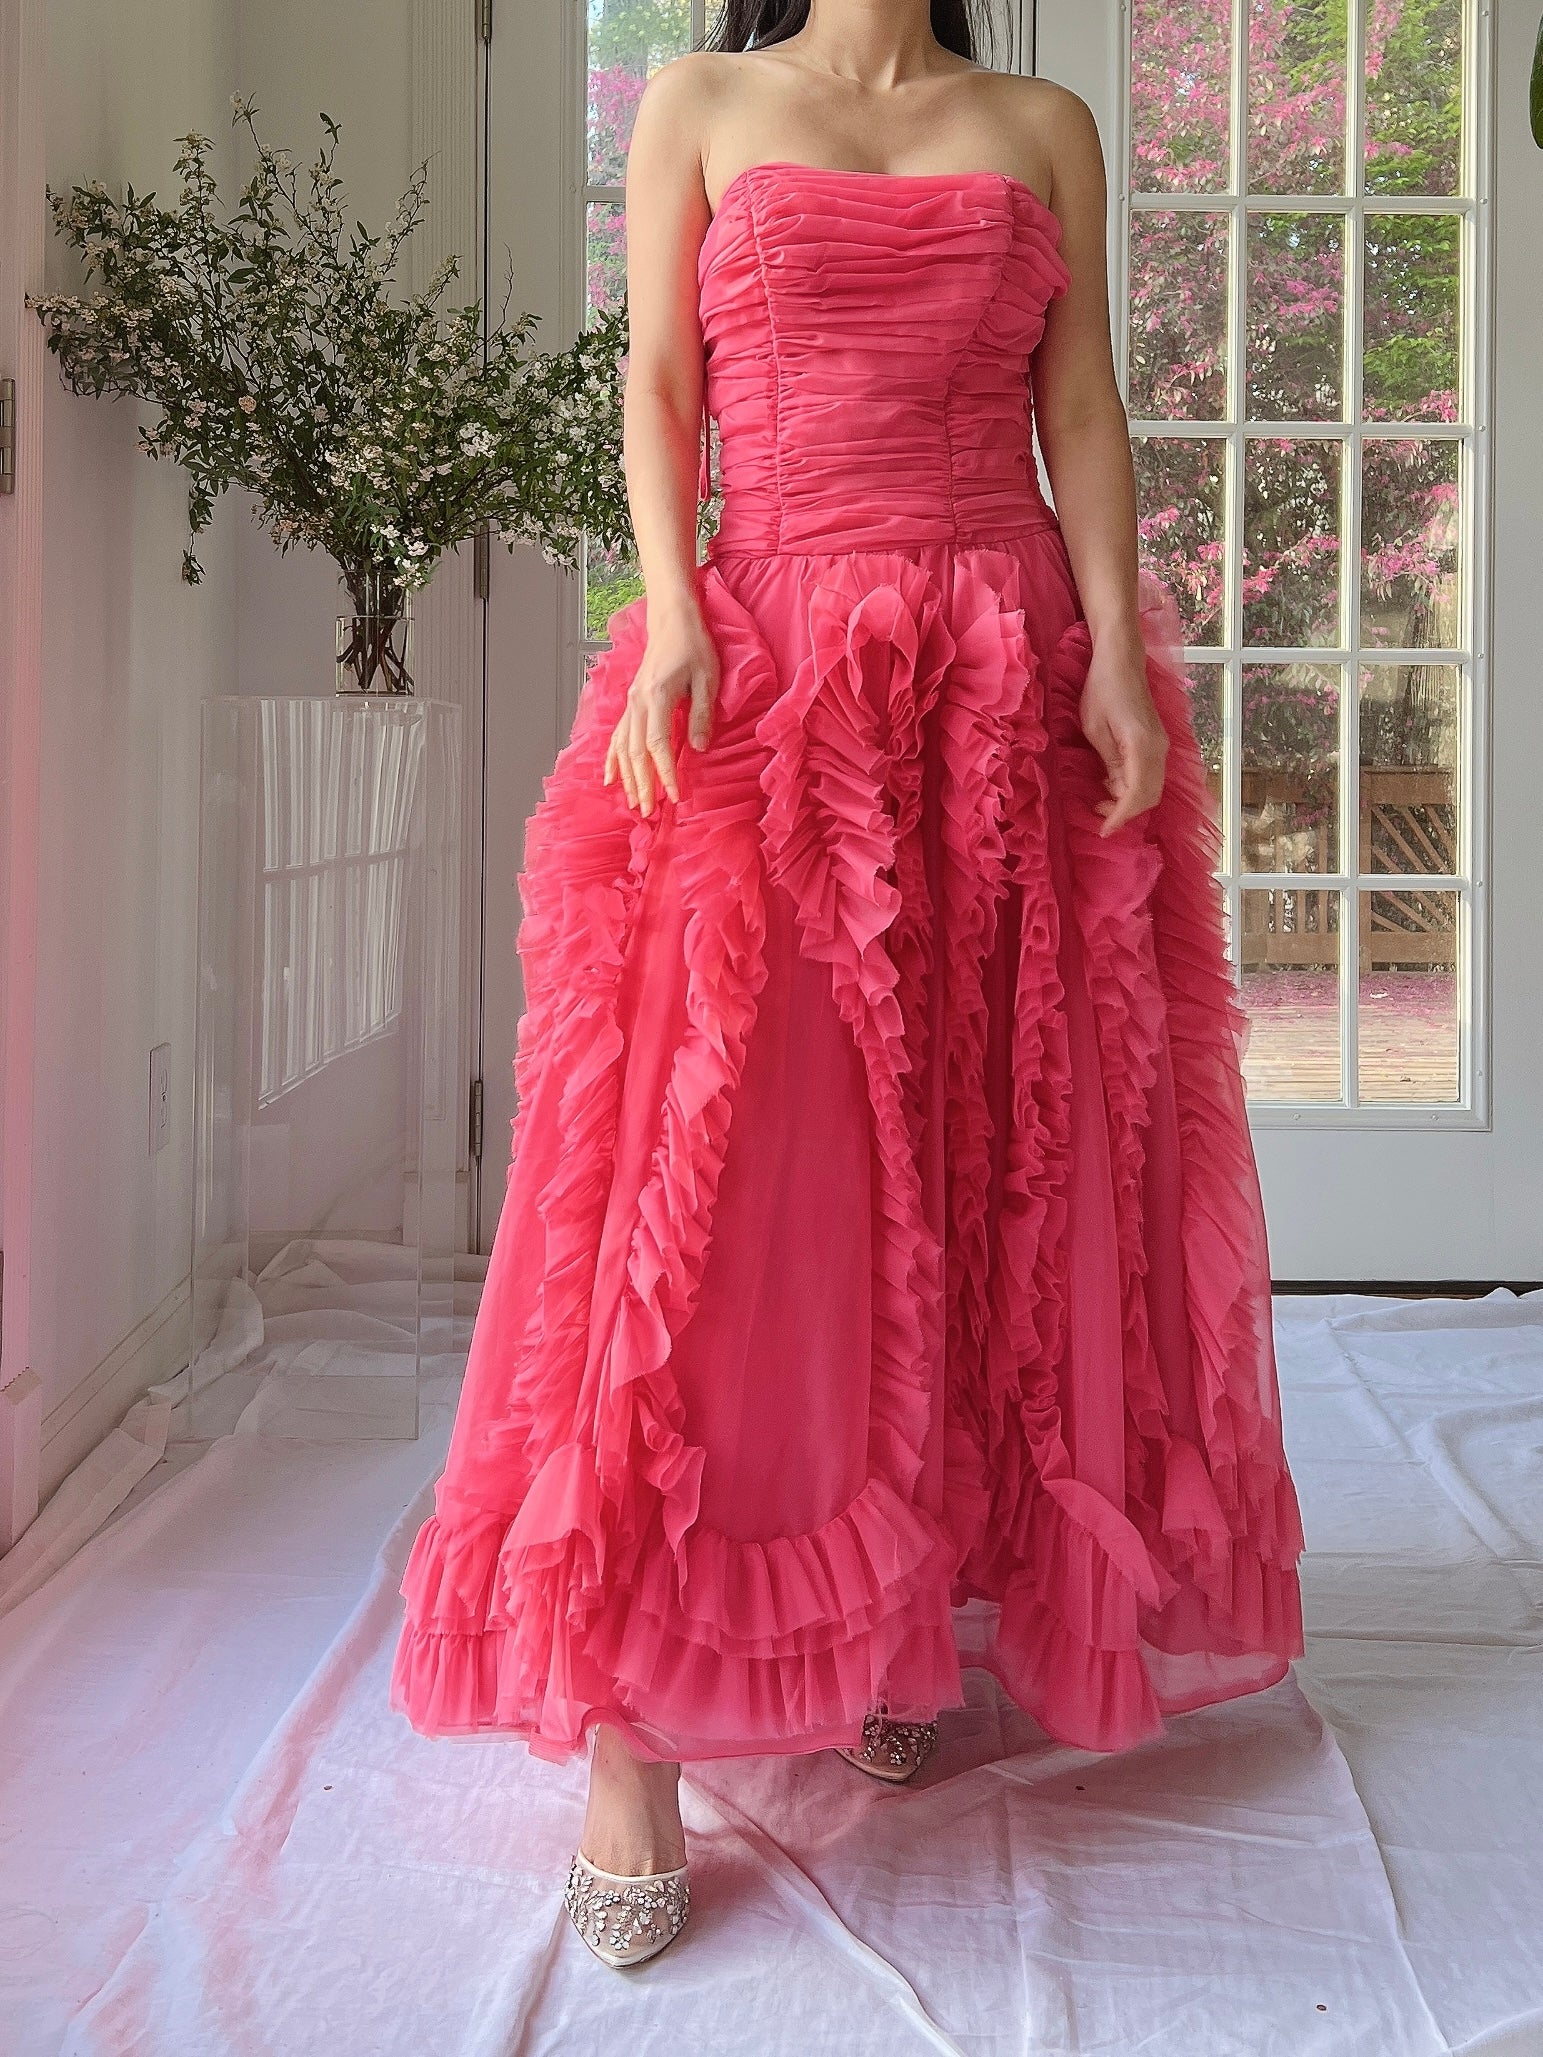 1960s Hot Pink Ruffle Dress - S